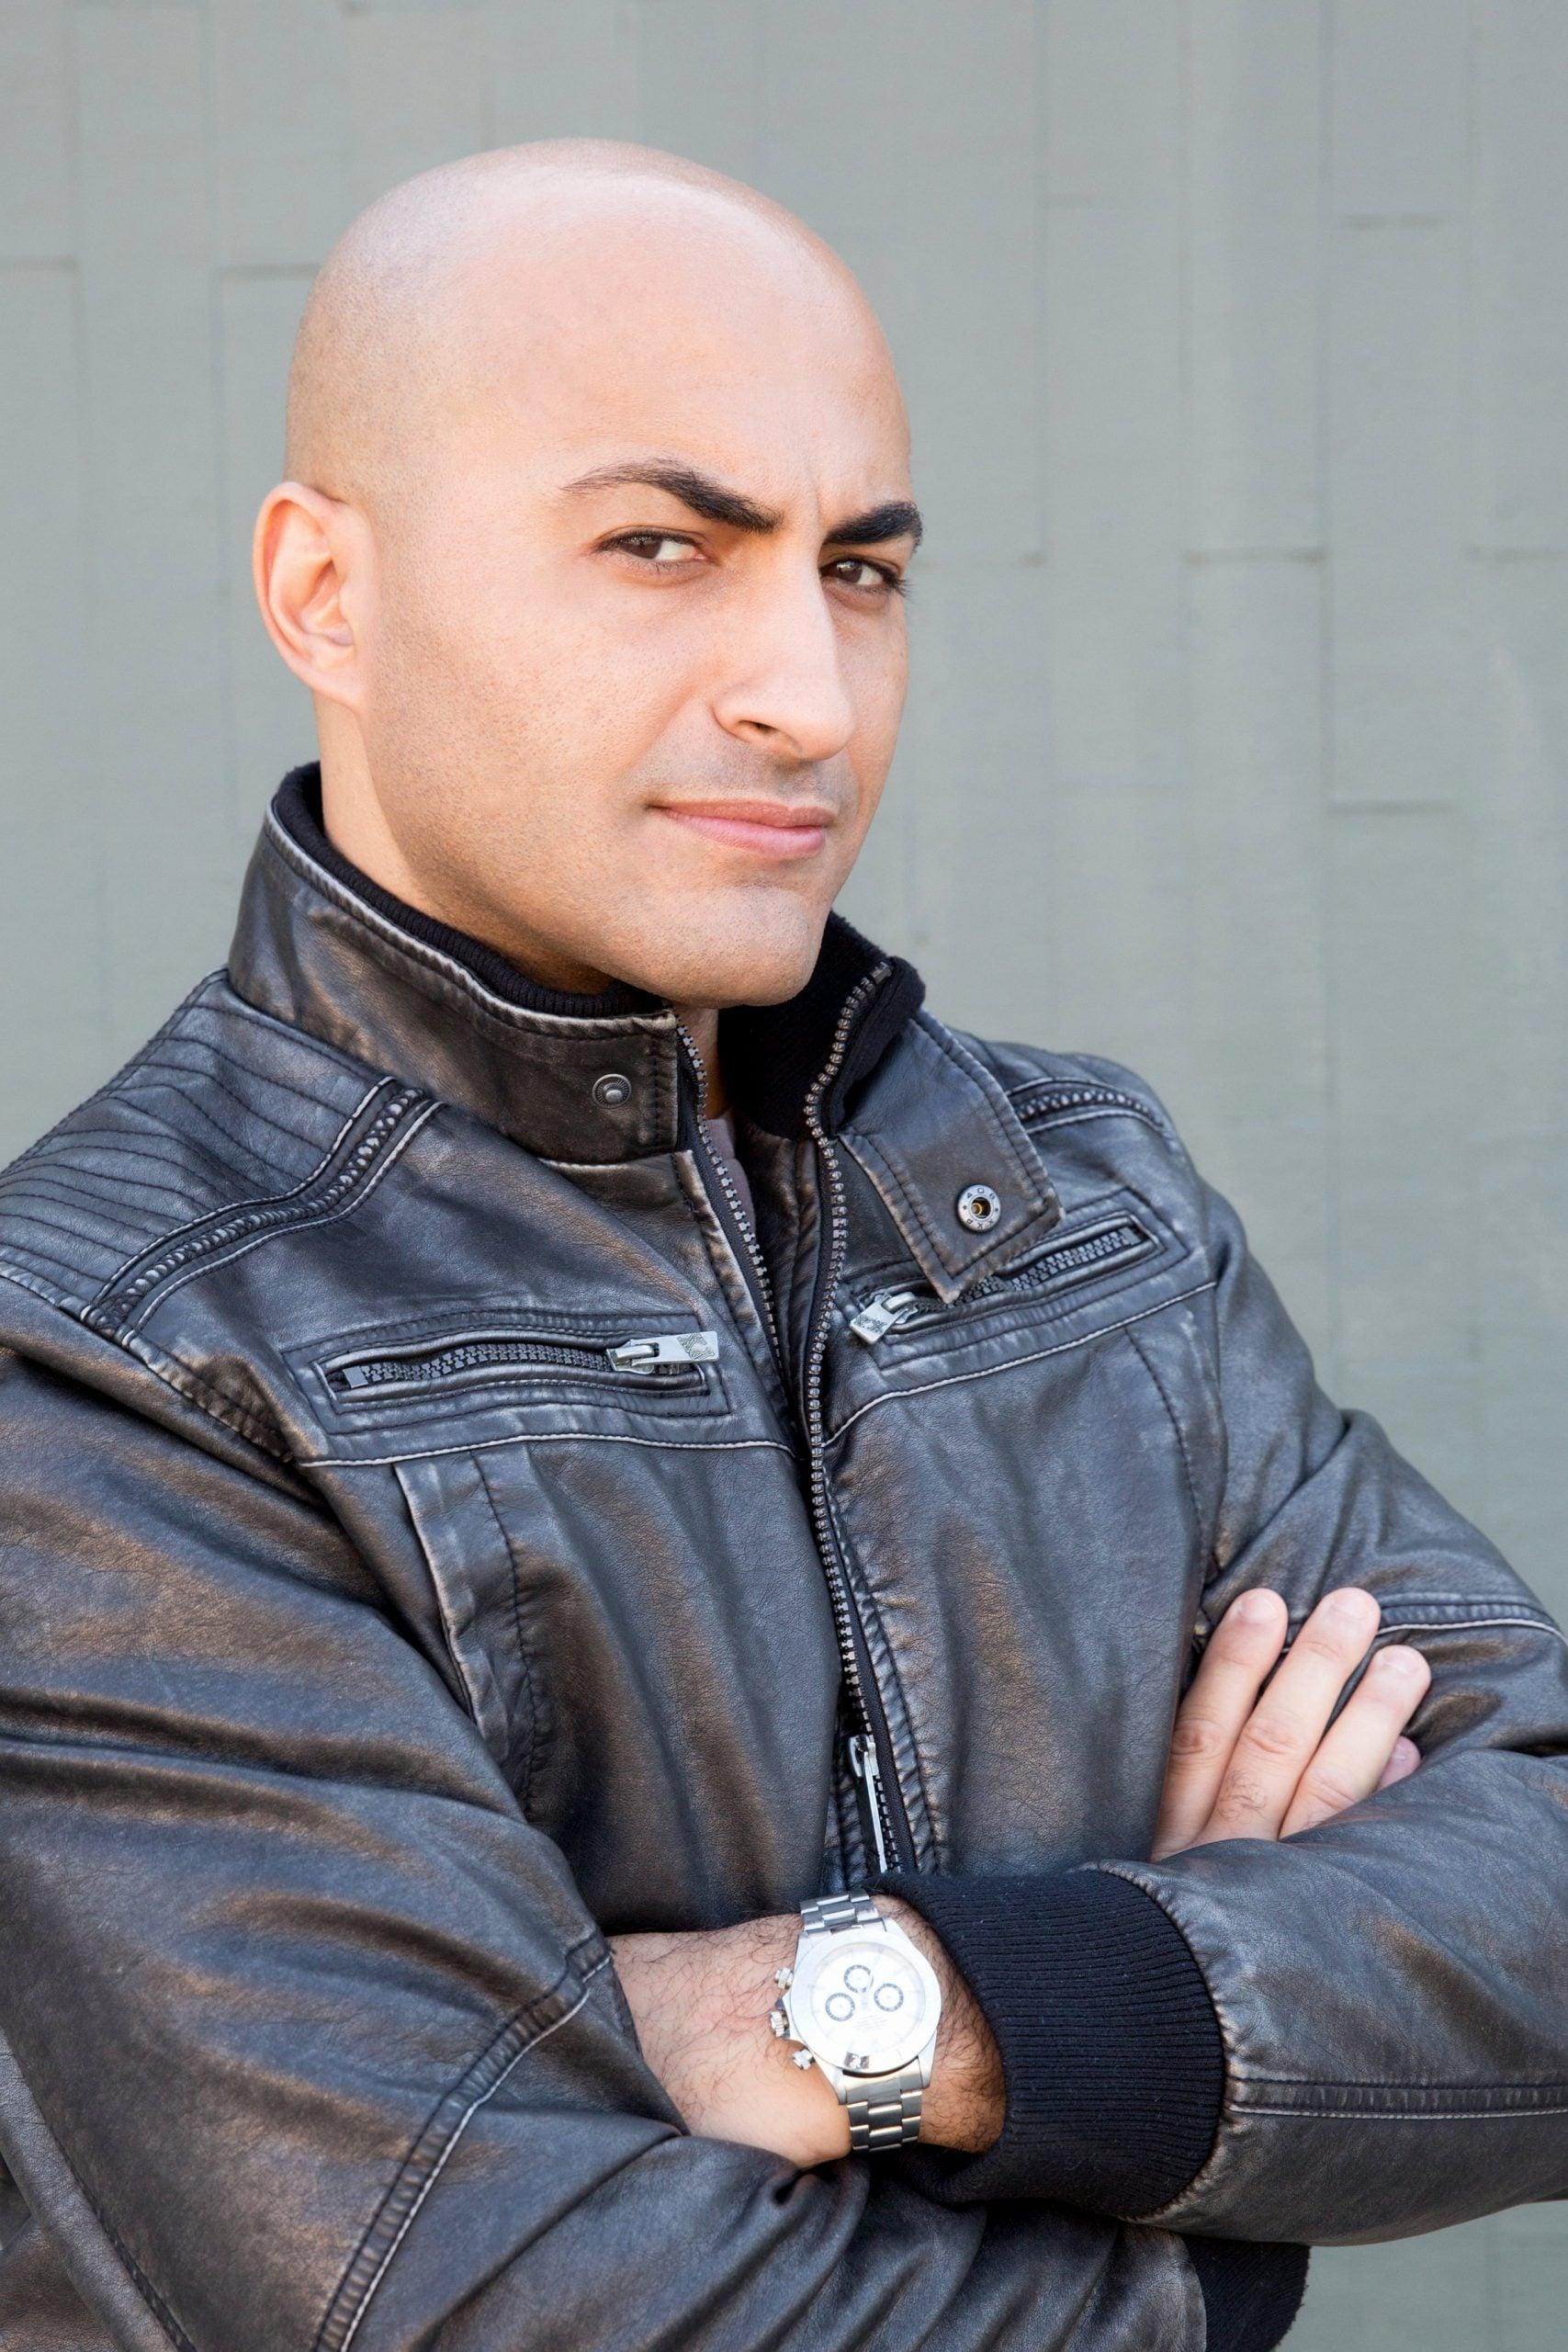 Slim Khezri | Actor at Premiere (uncredited)